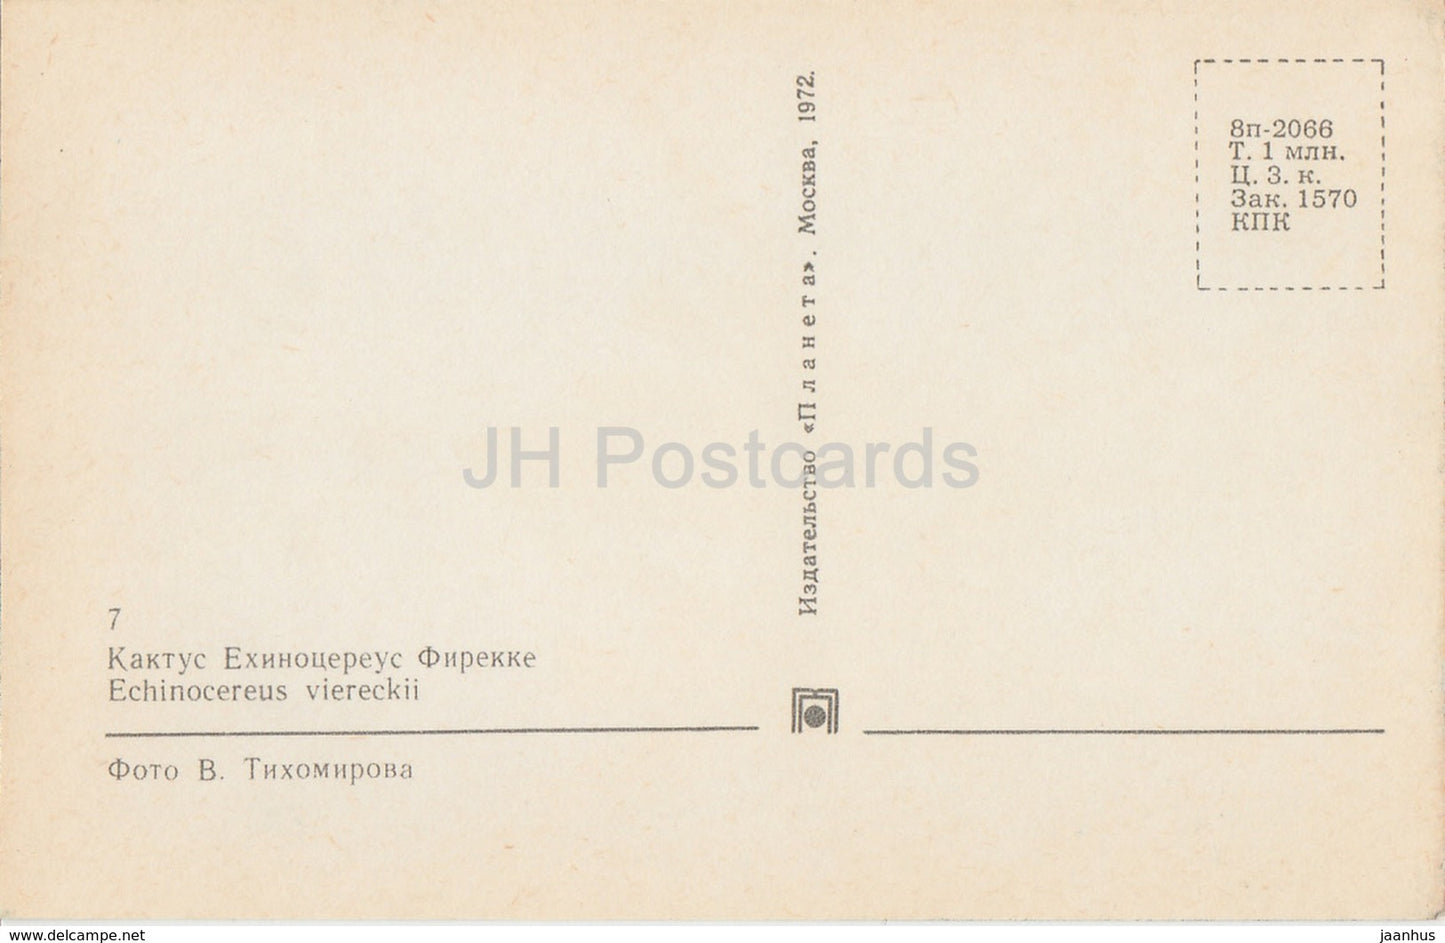 Echinocereus viereckii - Cactus - Flowers - 1972 - Russia USSR - unused - JH Postcards